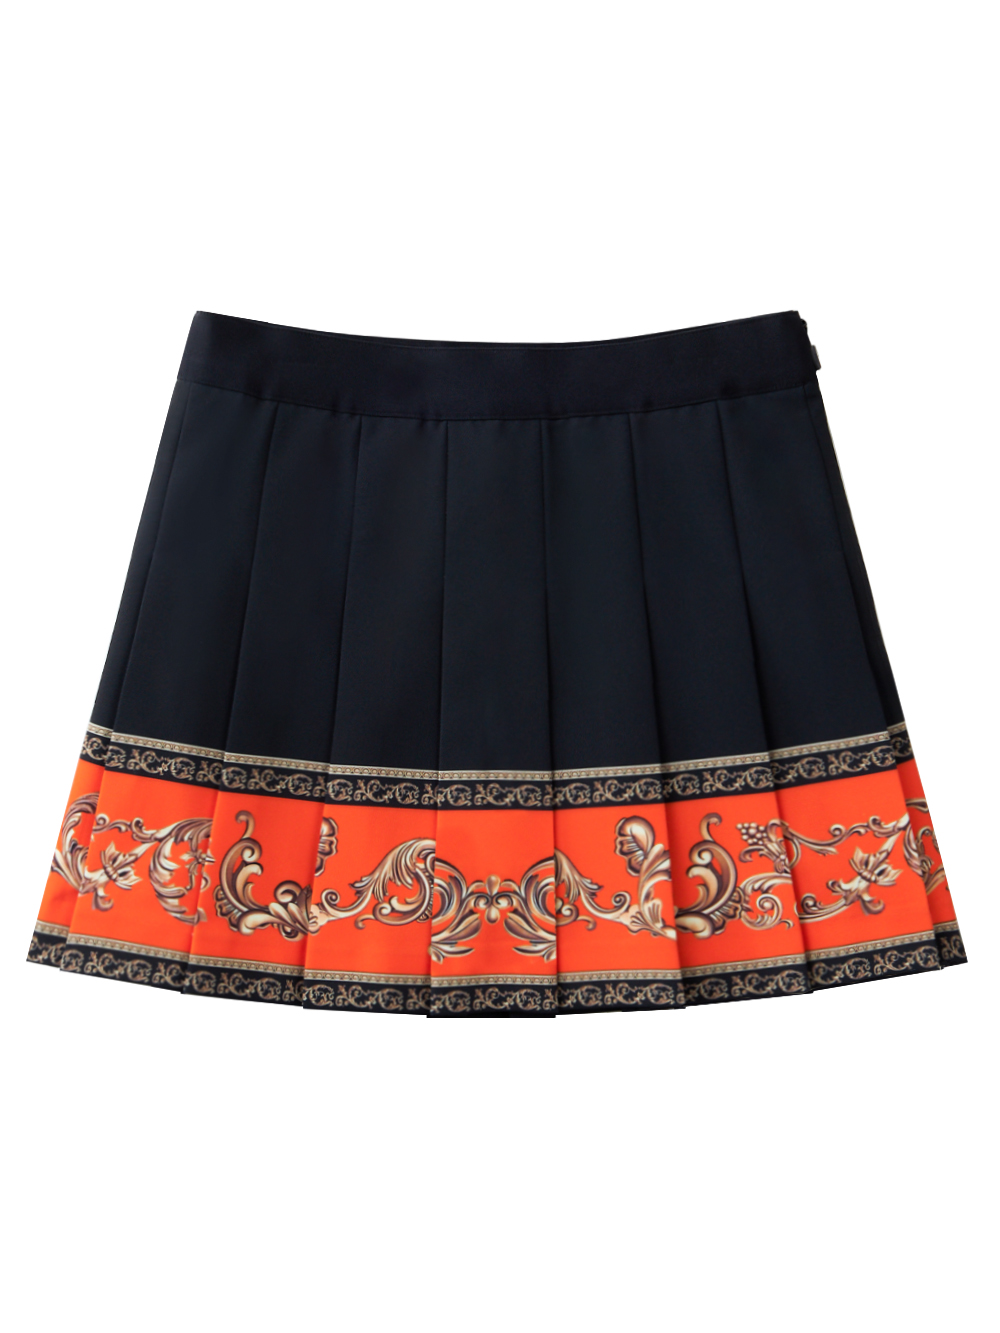 UTAA Neon Golden Baroque Flare Skirt  : Orange(UD1SKF307OR)